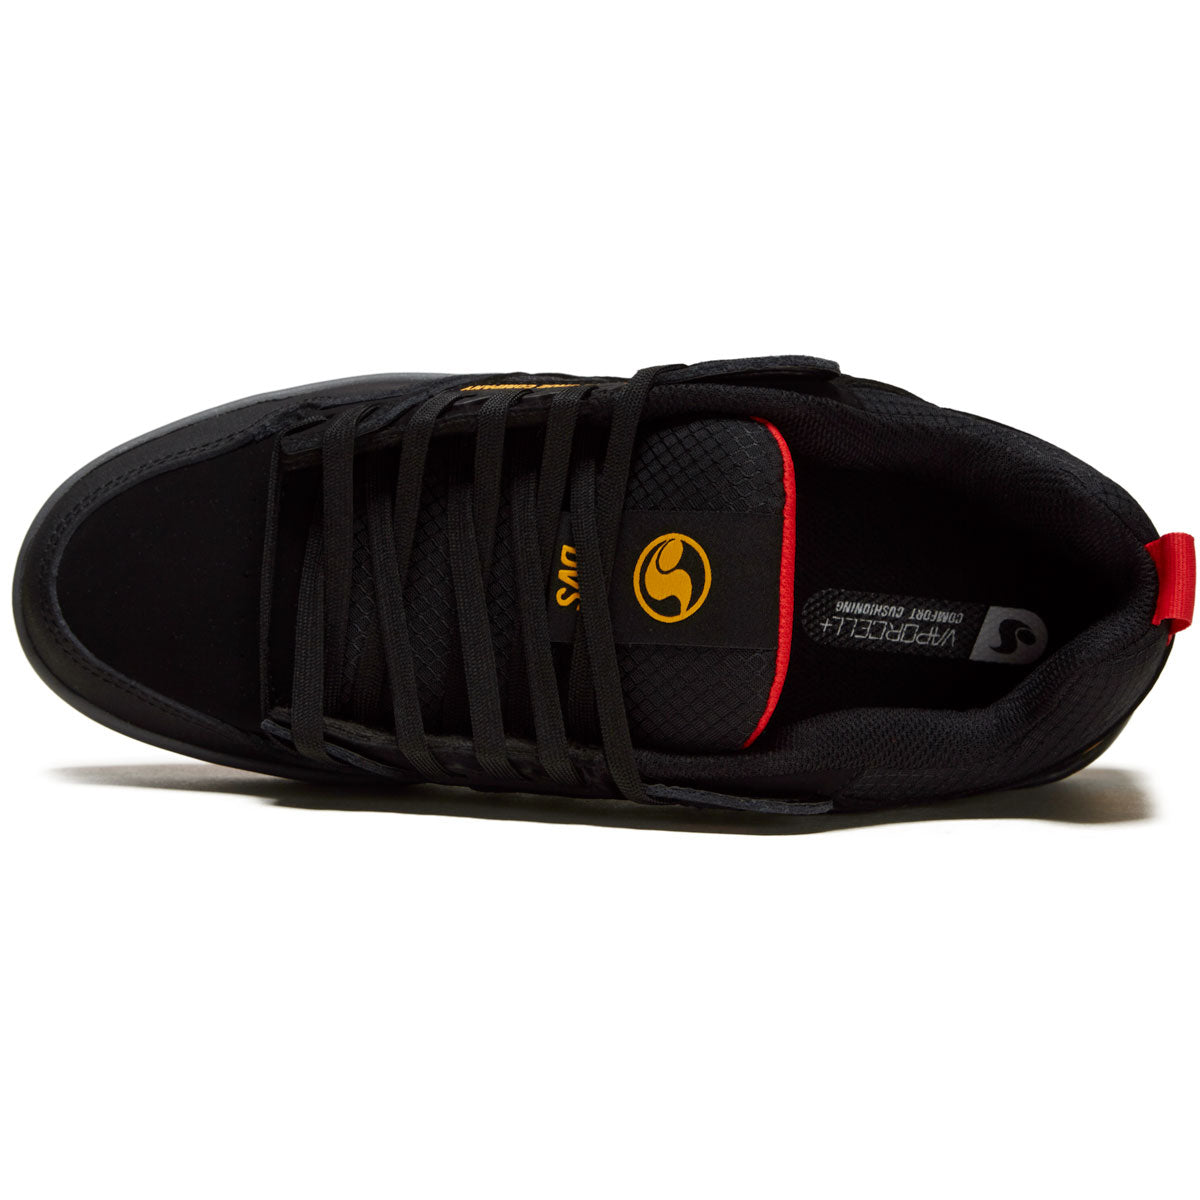 DVS Comanche 2.0+ Shoes - Black/Yellow/Red Nubuck image 3